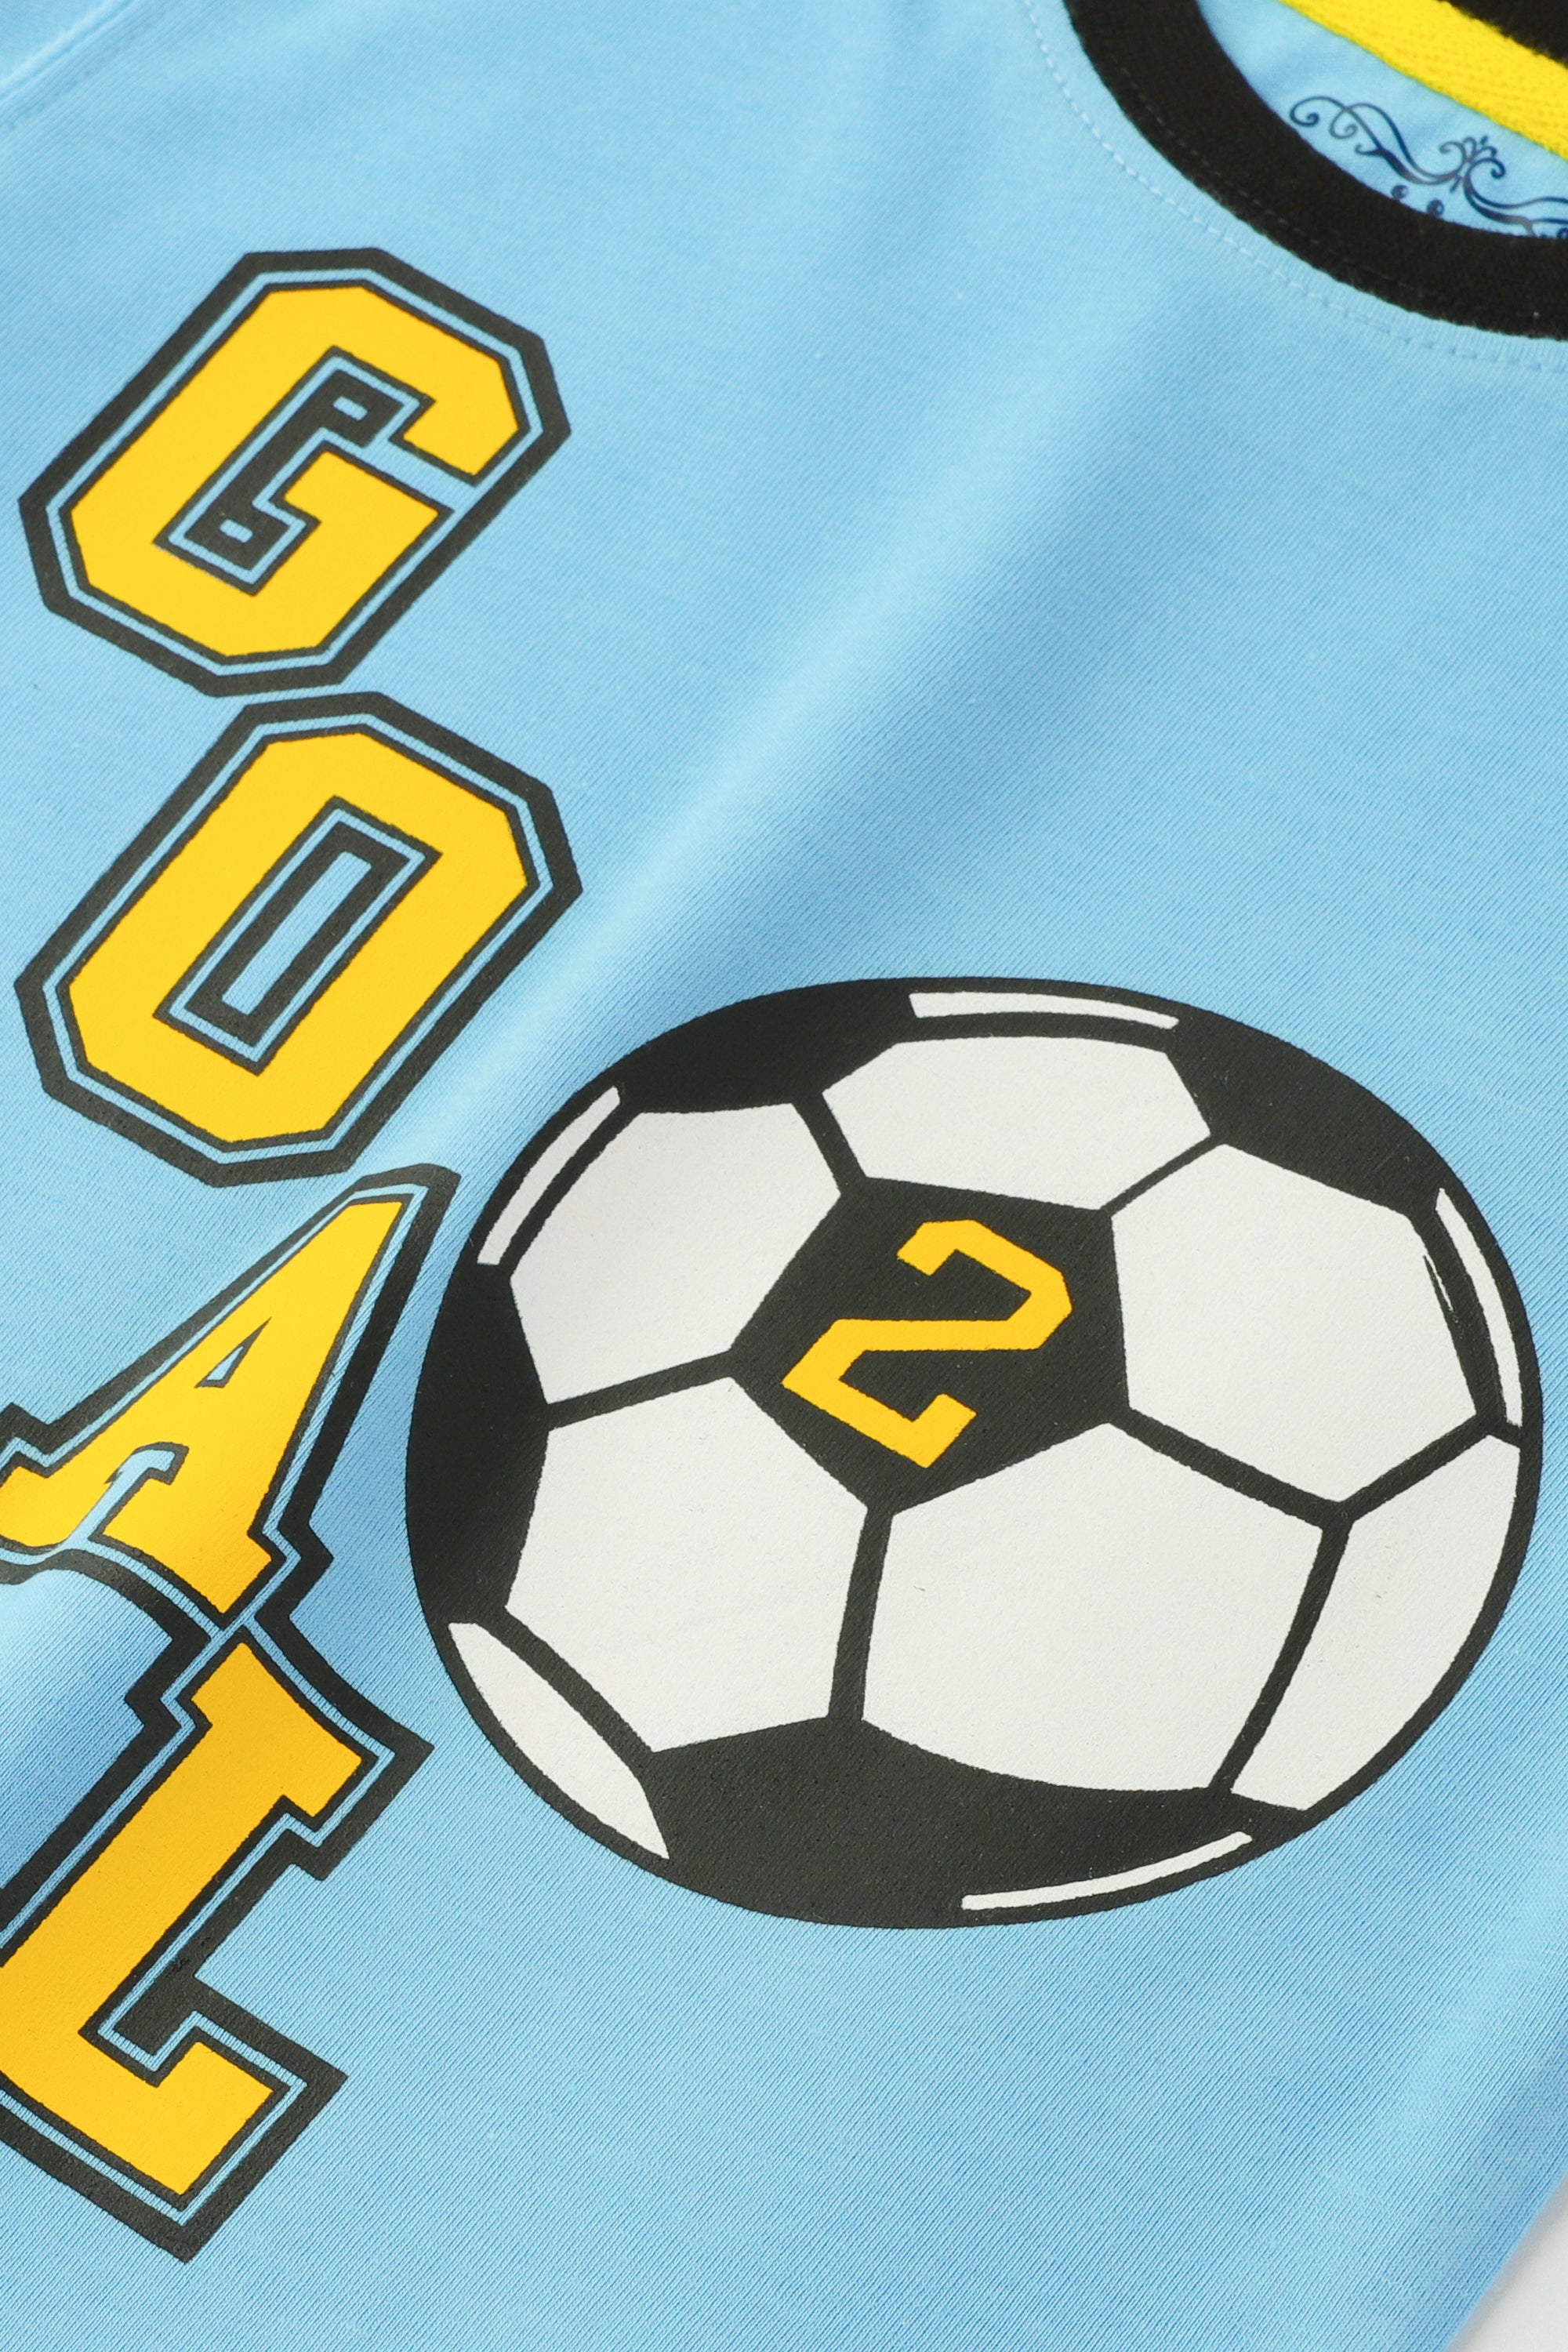 Boys Blue Goal T-shirt